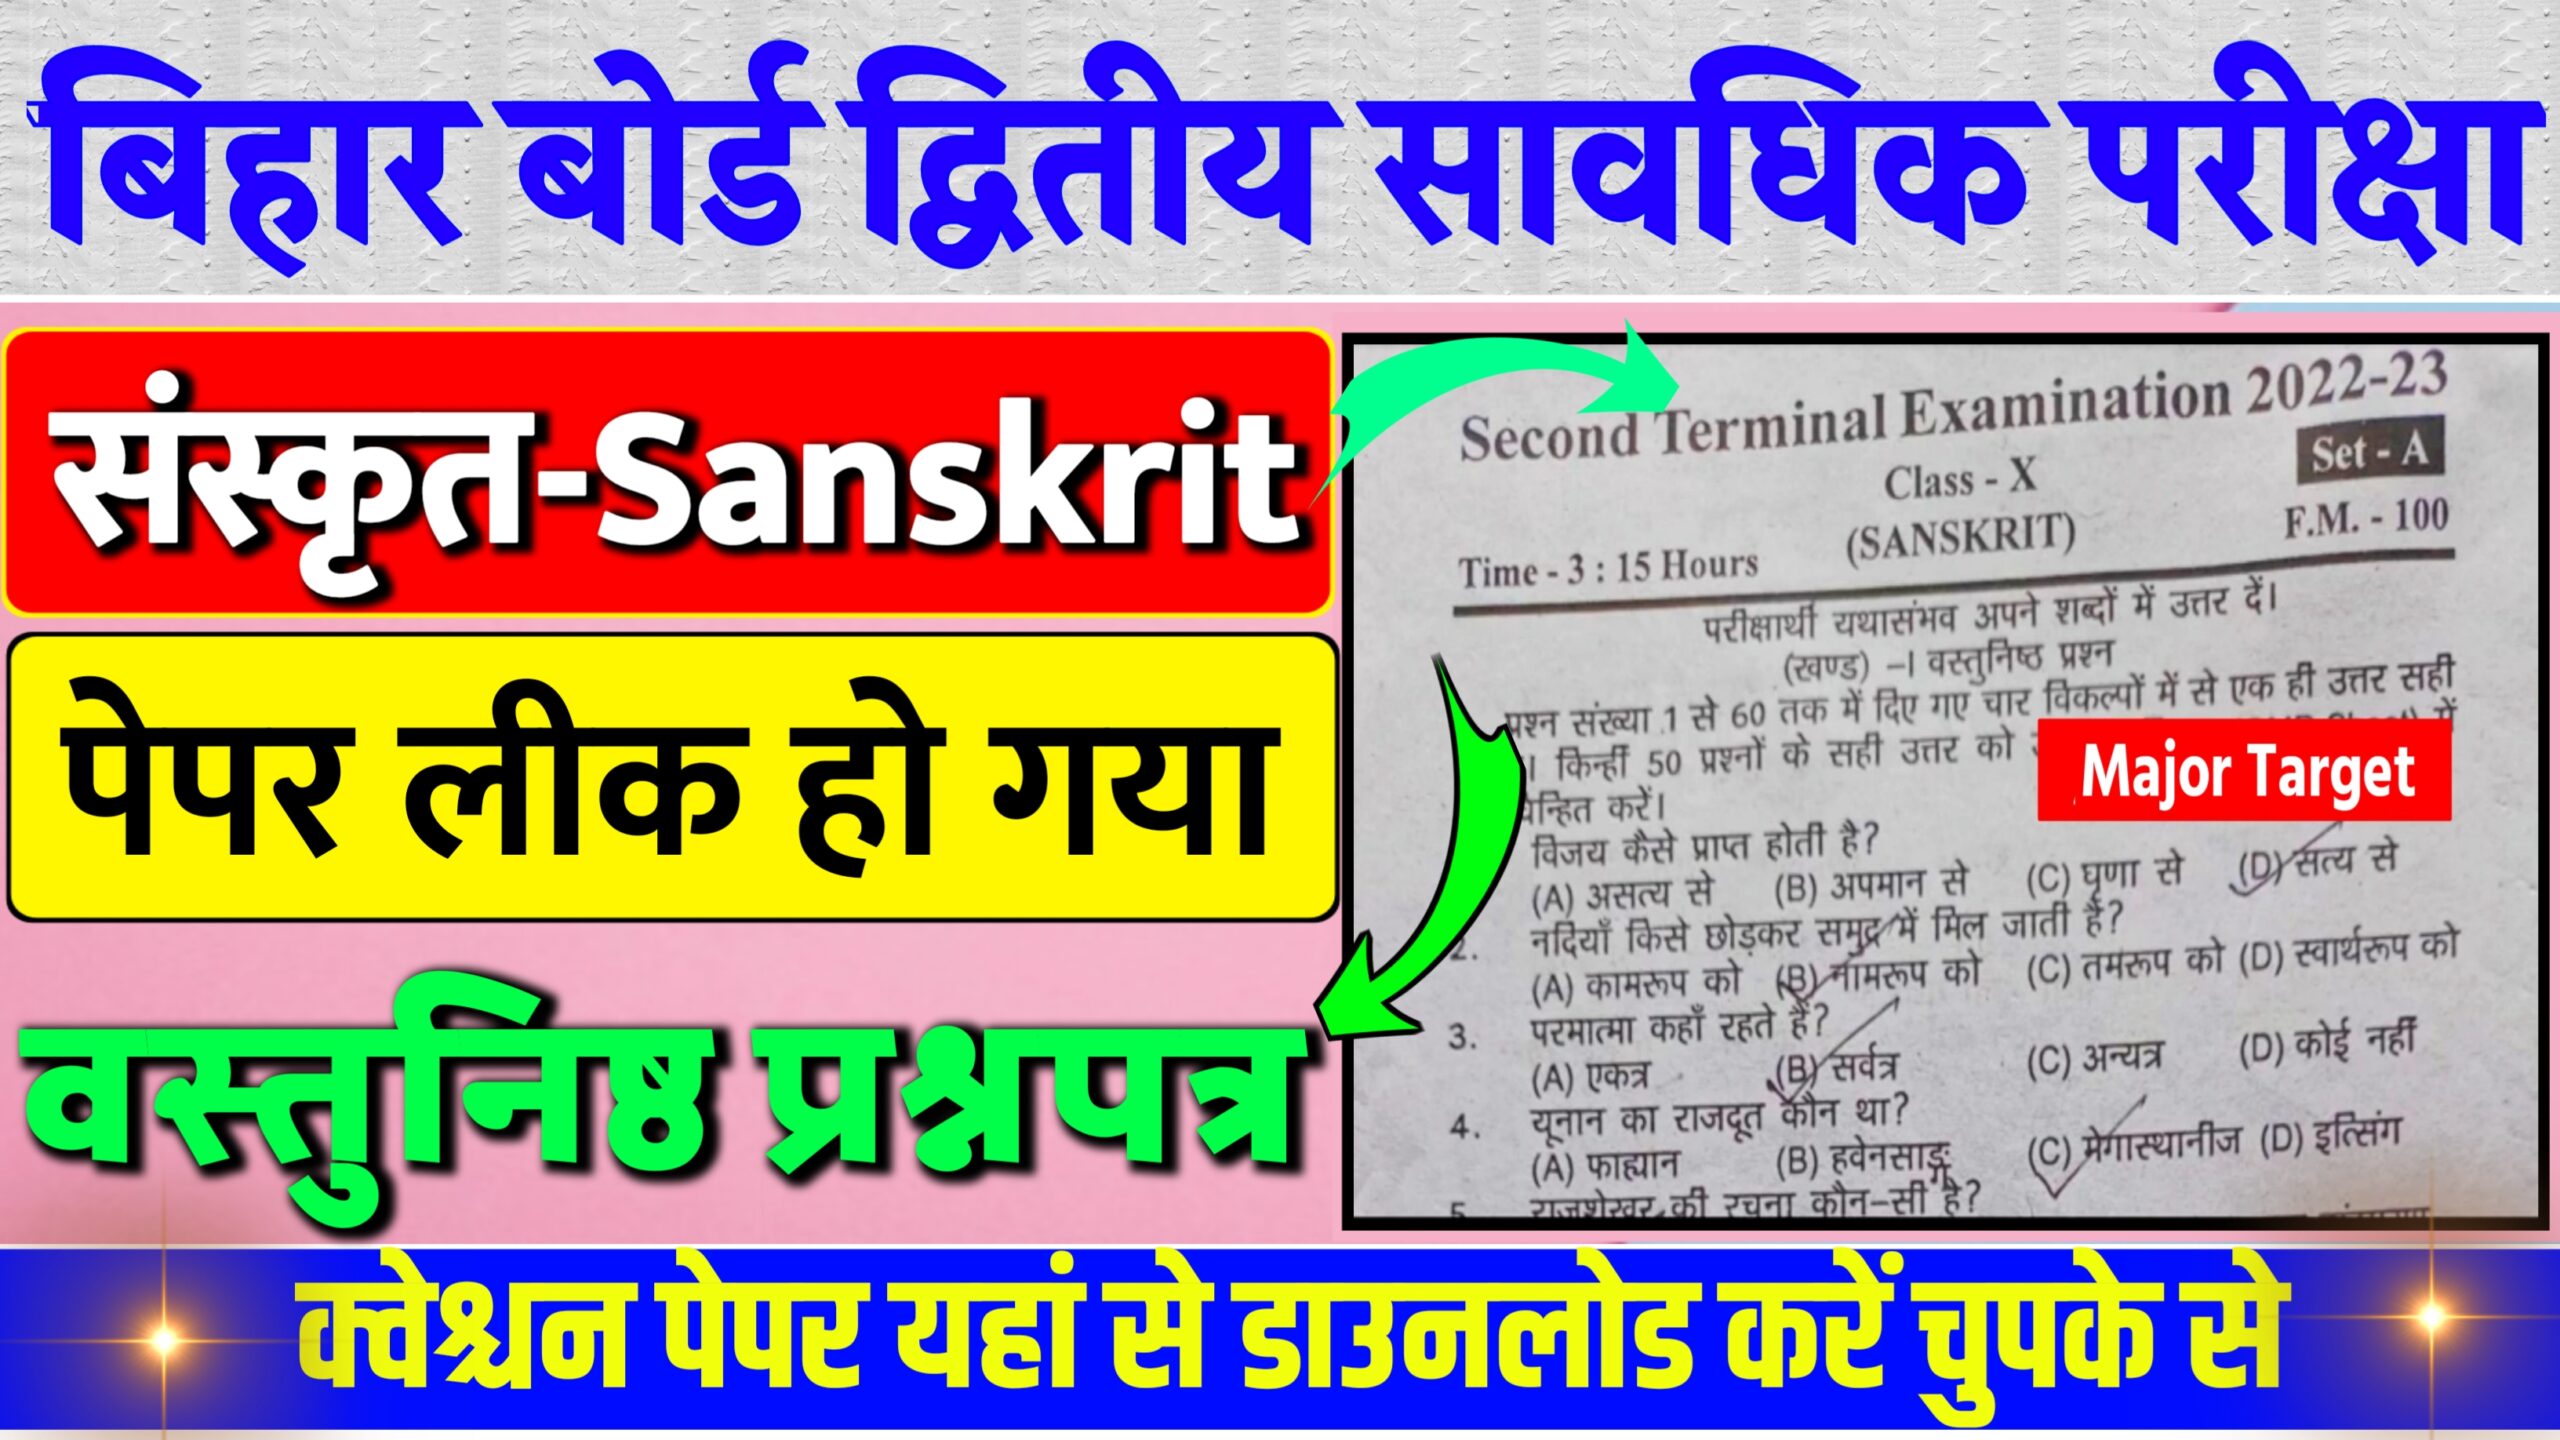 class 10th Sanskrit second terminal exam question paper 2022